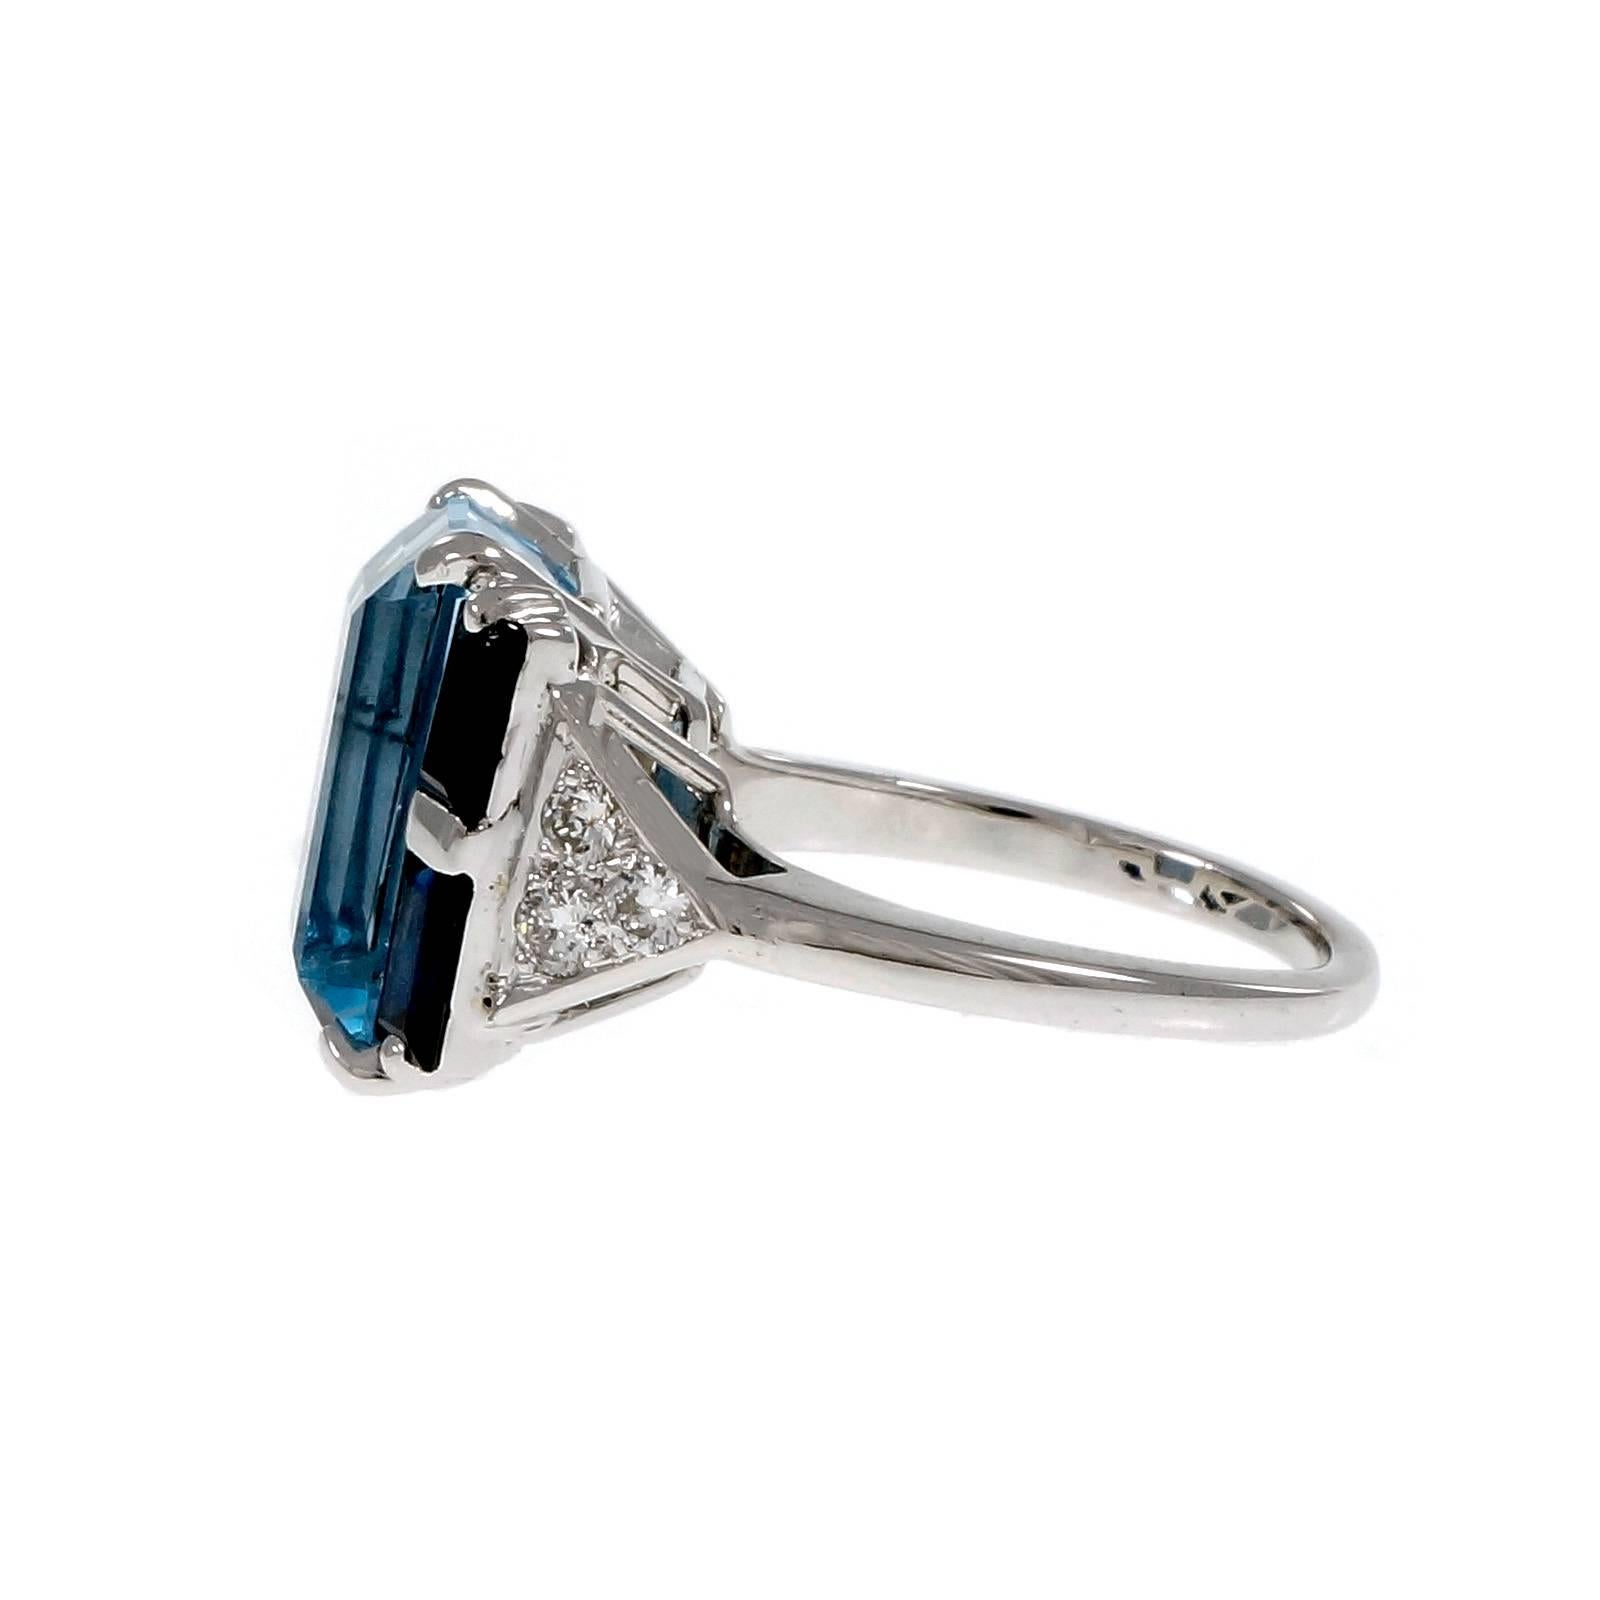 1930’s Art Deco fine gem Aqua Sapphire diamond cocktail ring. Late Deco design.

1 Emerald cut blue Aquamarine, approx. total weight 6.80cts, VS1
4 Emerald cut fine blue Sapphires, approx. total weight 1.41cts, VS
6 round diamonds, approx. total